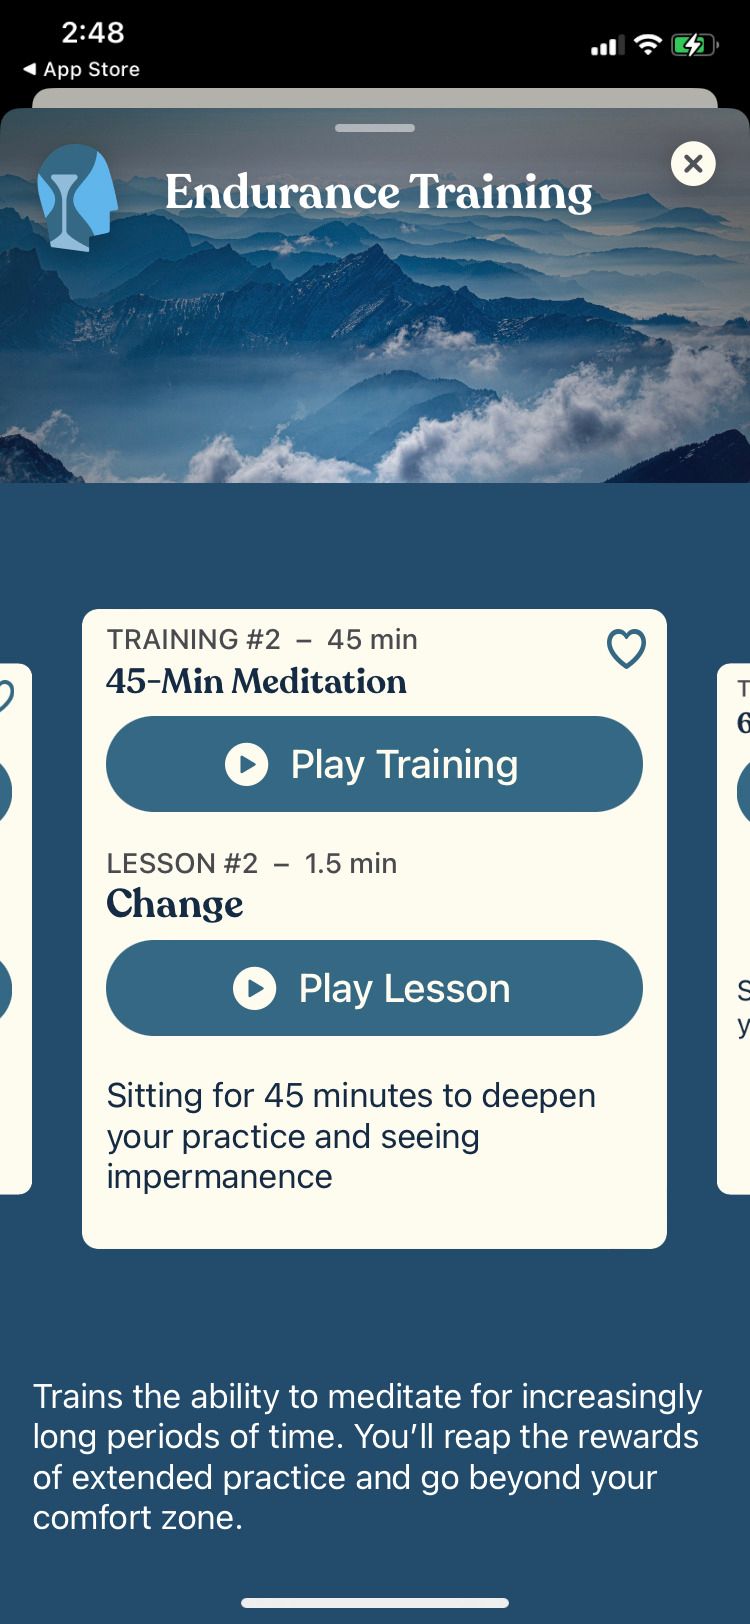 FitMind app Endurance Training